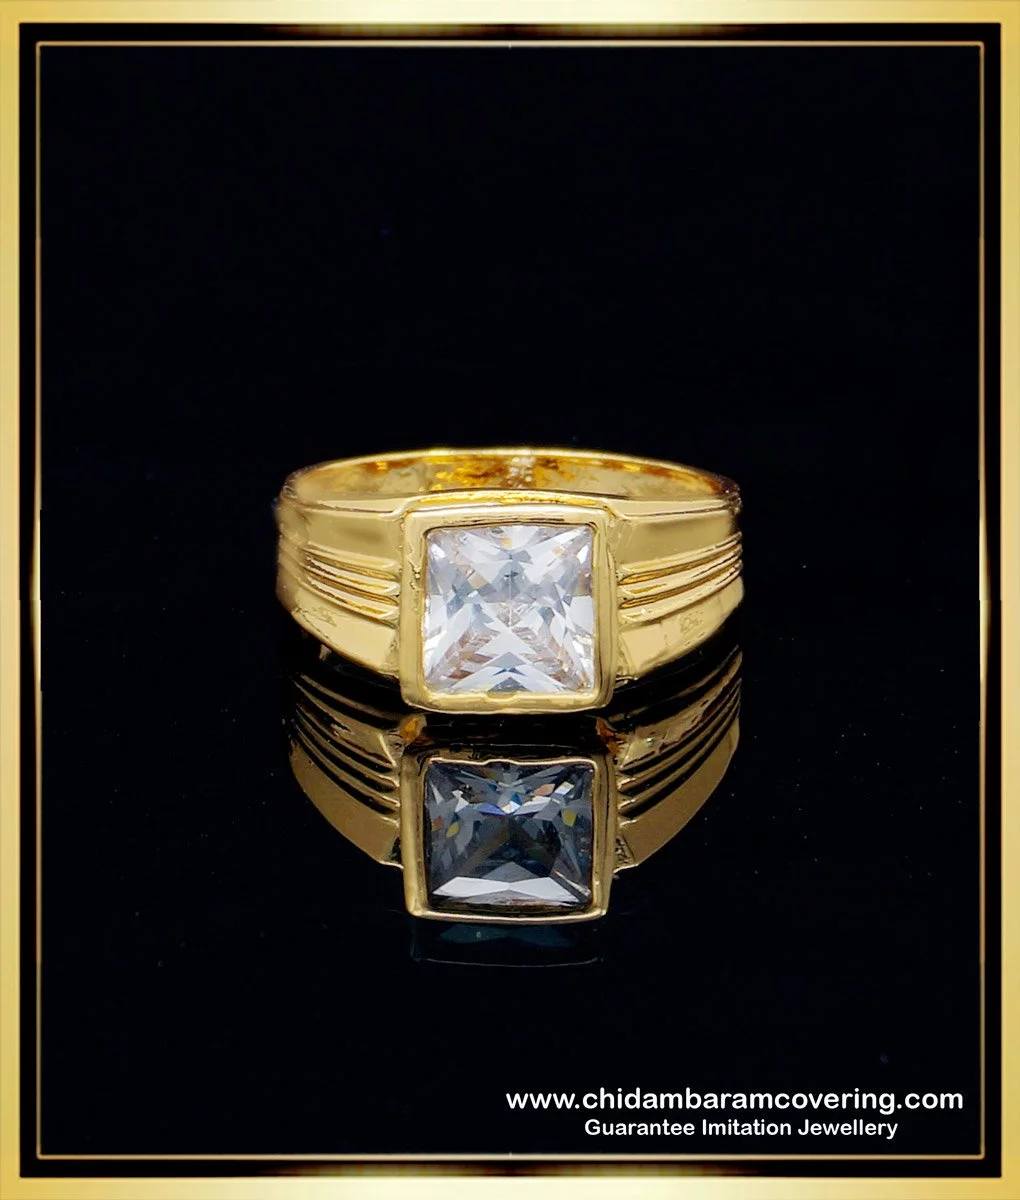 2 Gram Gold Plated TV Ring Superior Quality Ring for Men FR1345